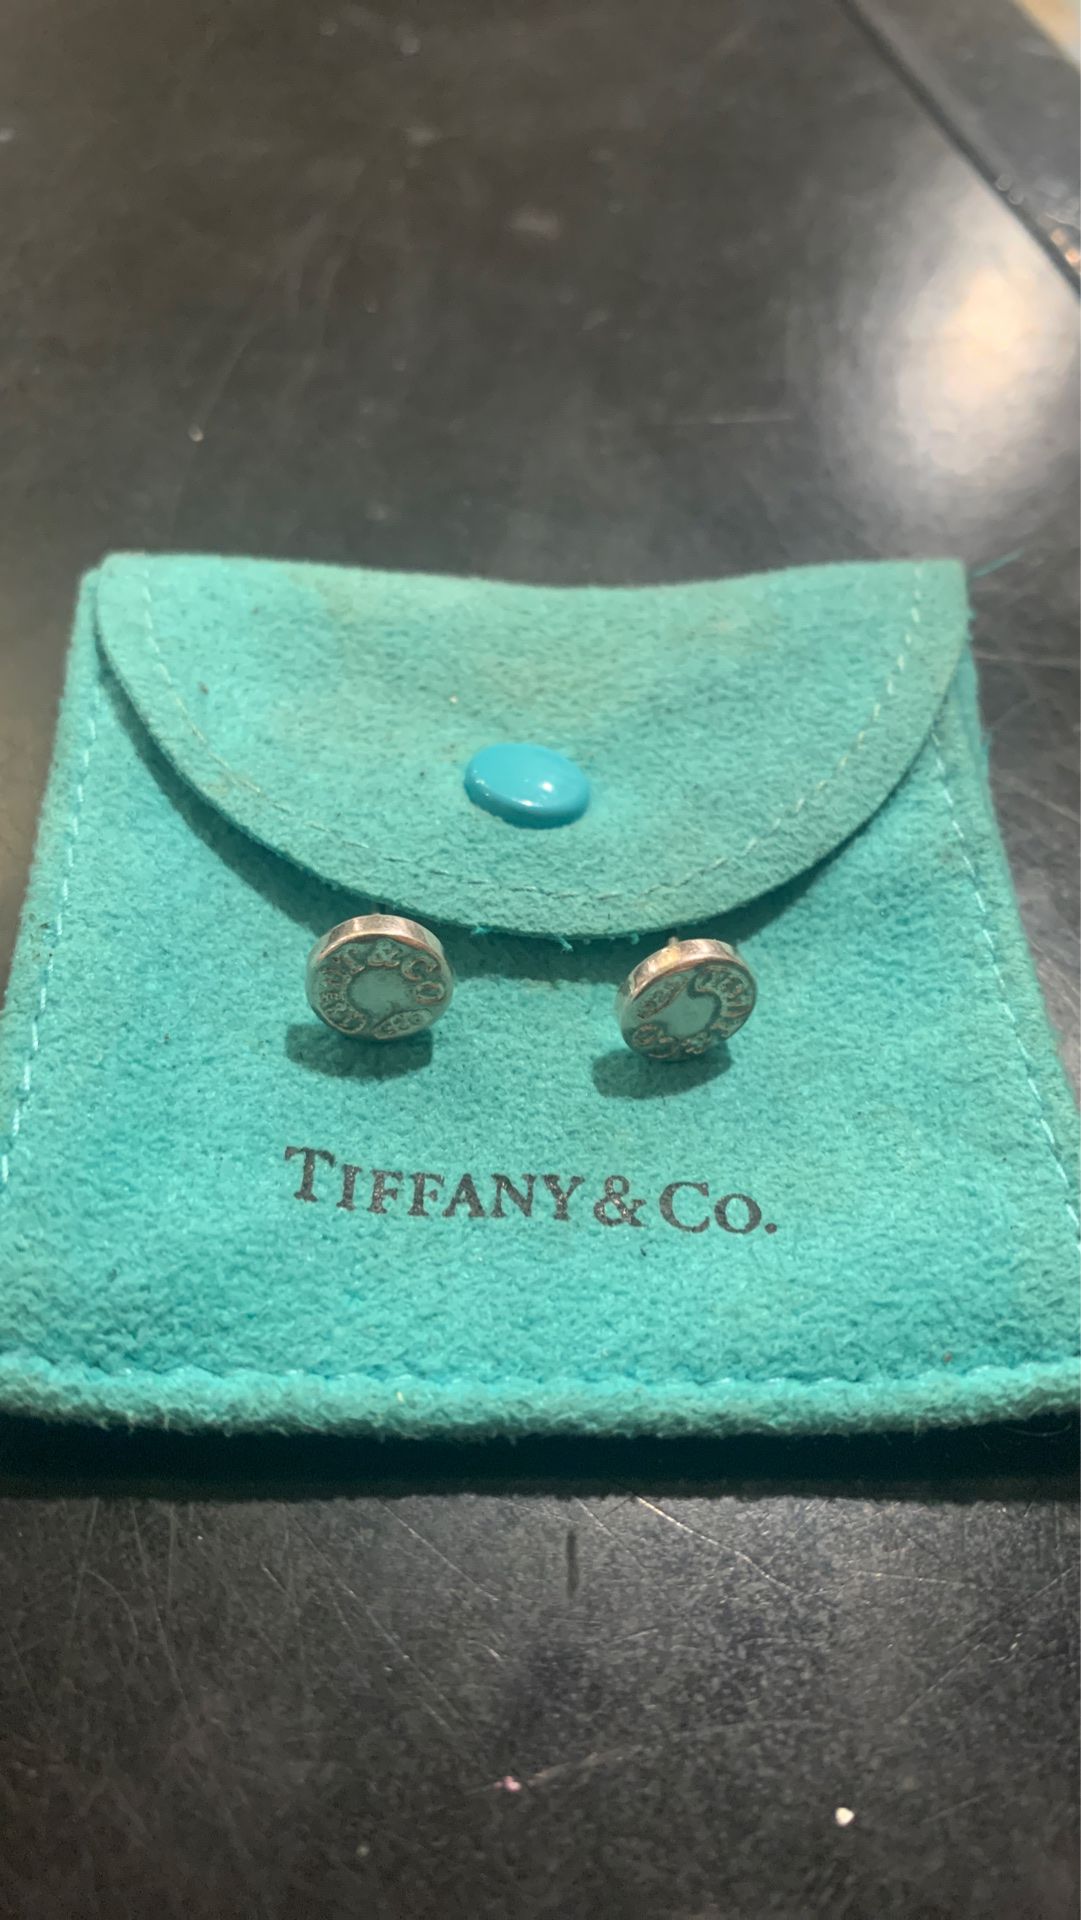 Return to TIFFANY & CO circle stud earrings